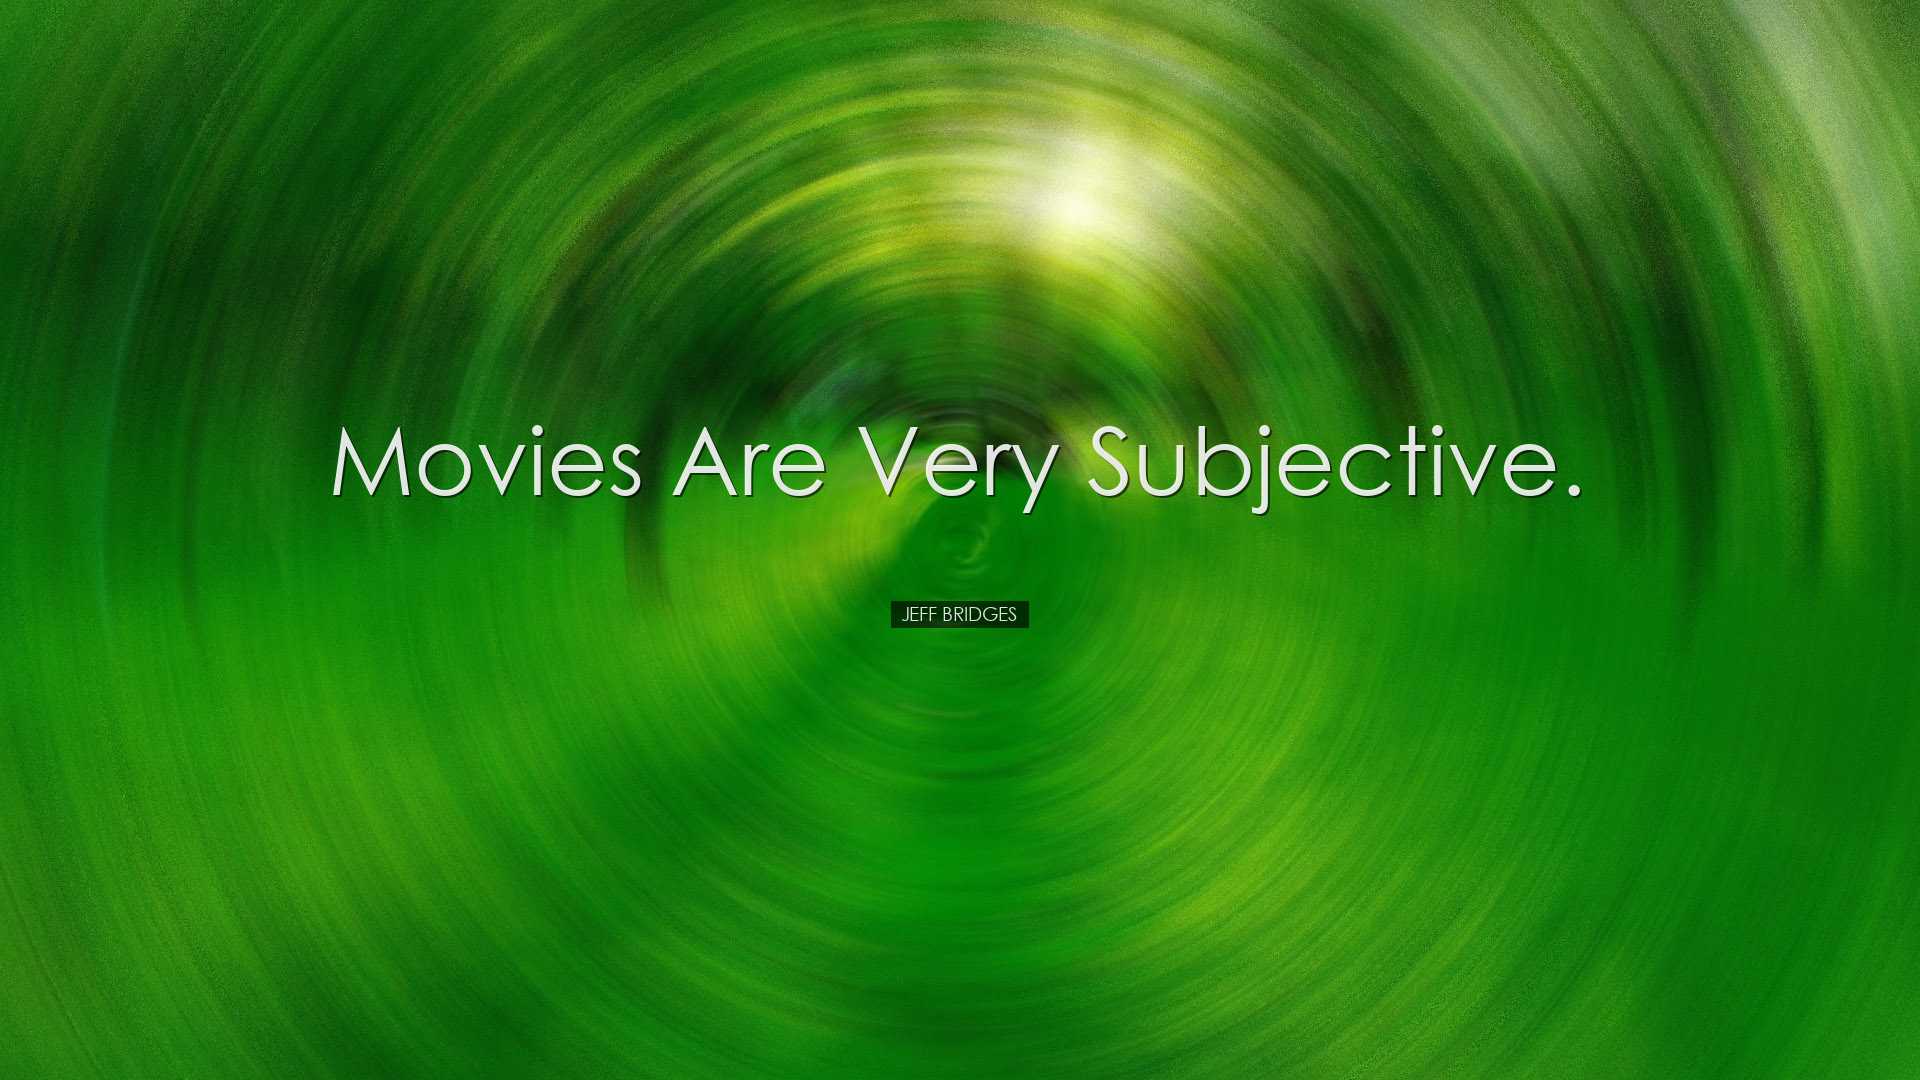 Movies are very subjective. - Jeff Bridges